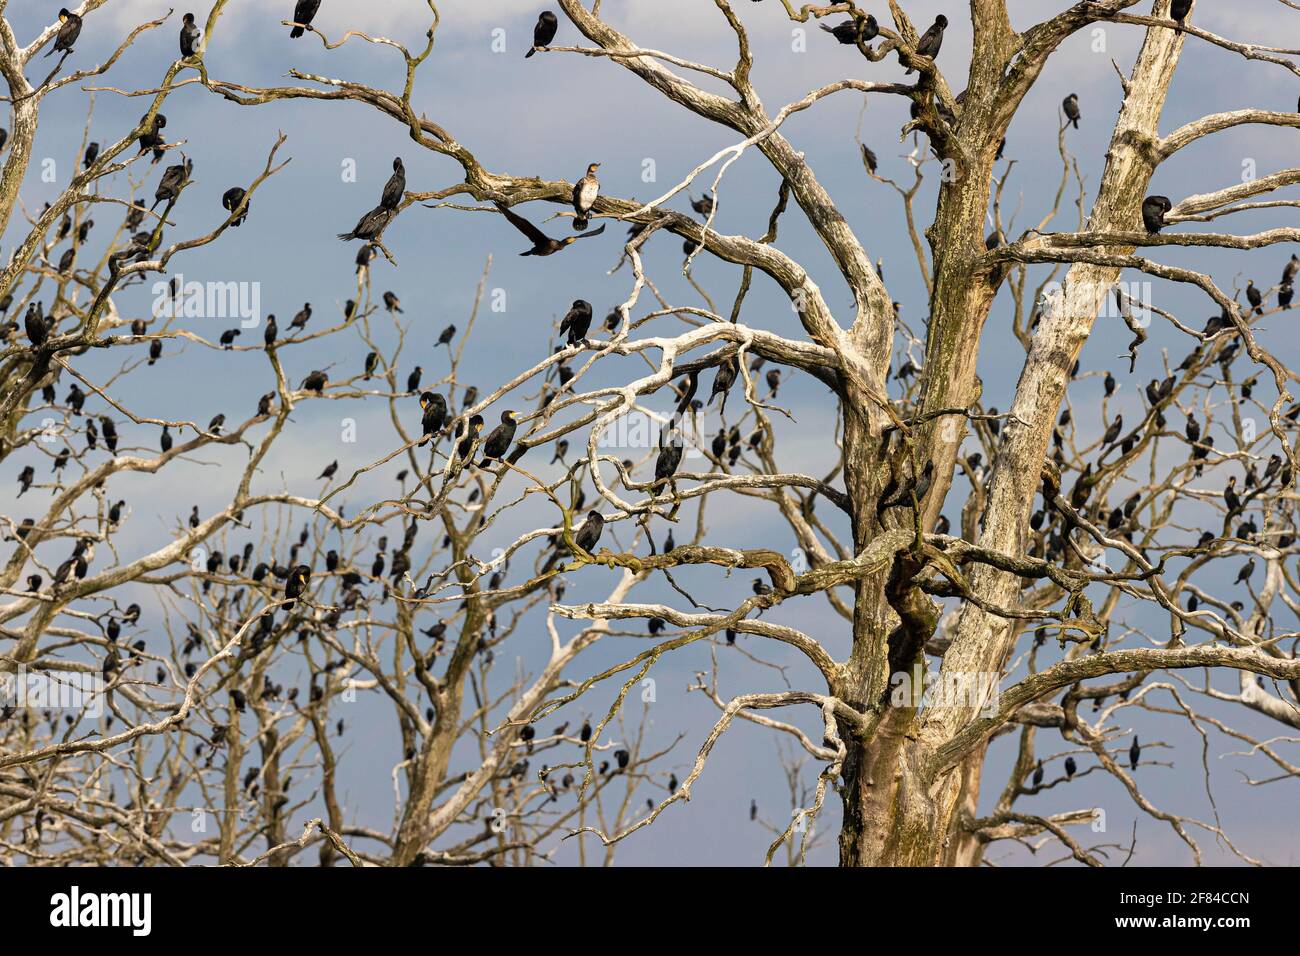 Grande cormorano (Phalacrocorax carbo), uccelli di riposo su alberi morti, Anklamer Stadtbruch riserva naturale, Anklam, Meclemburgo-Pomerania occidentale, Germania Foto Stock